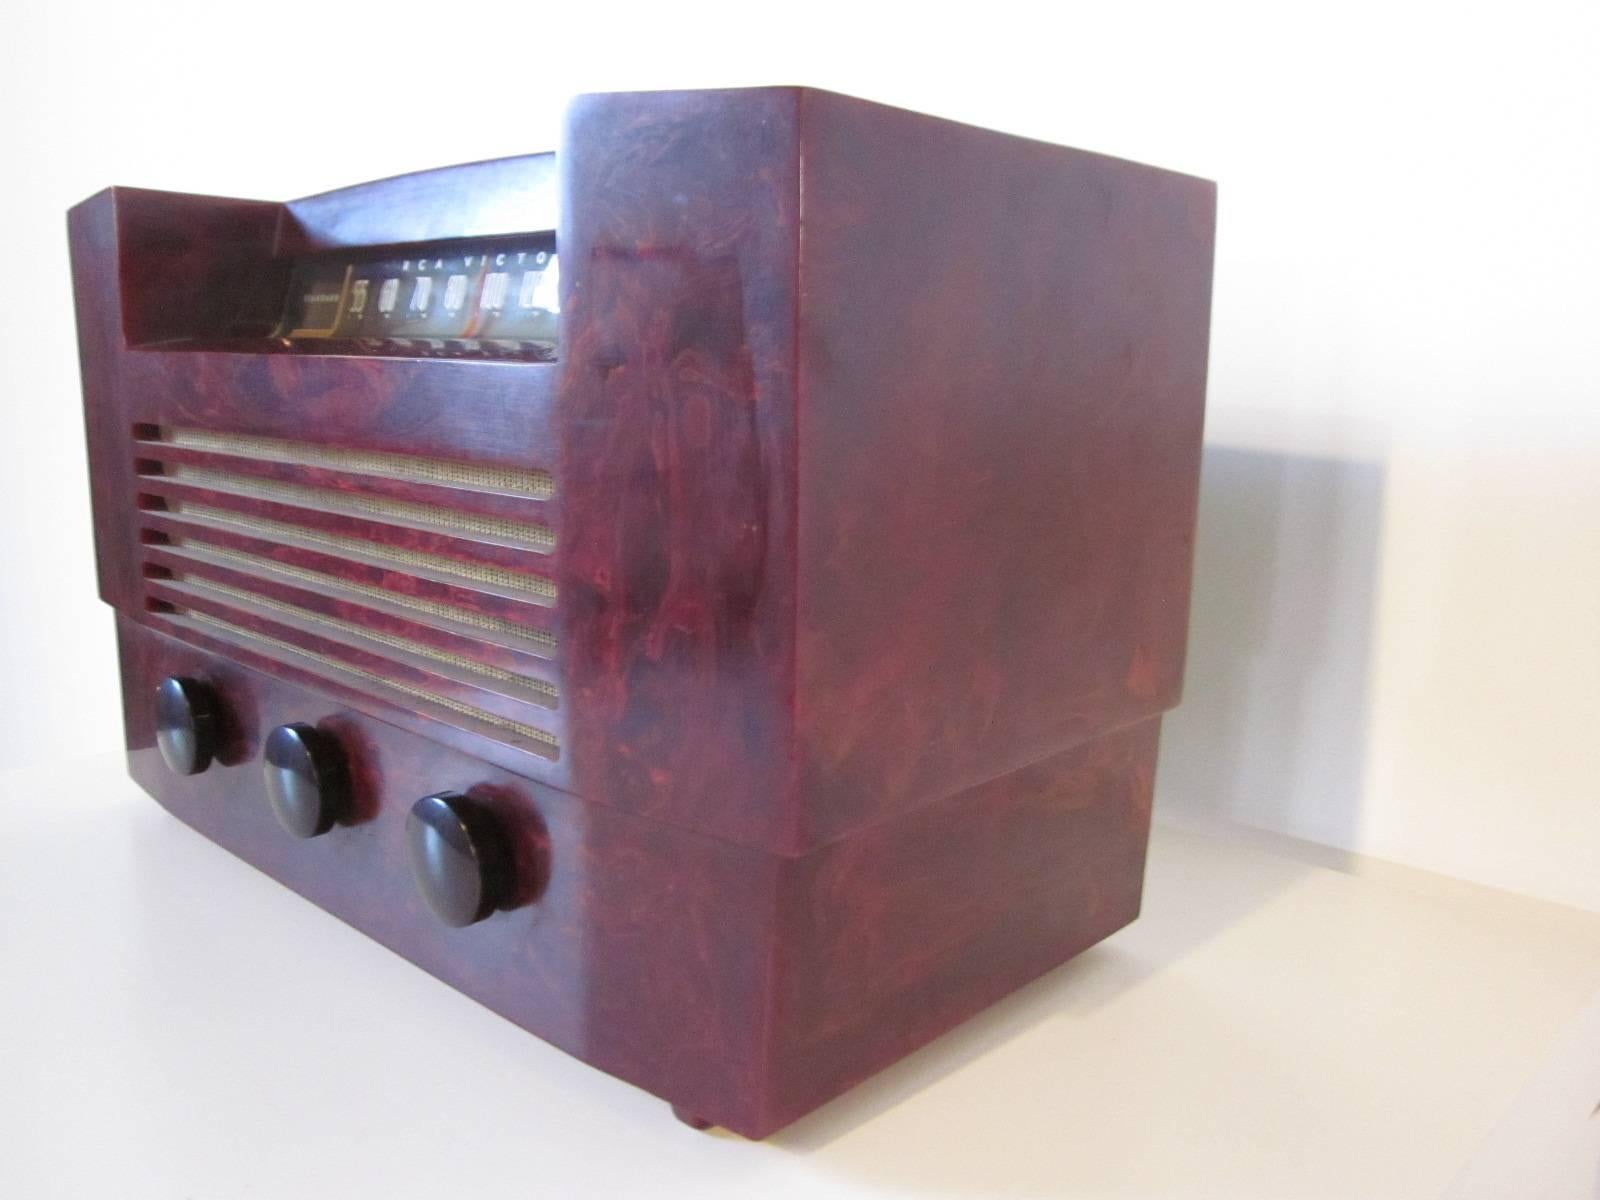 American RCA Marbleized Catalin Radio Model 66X8